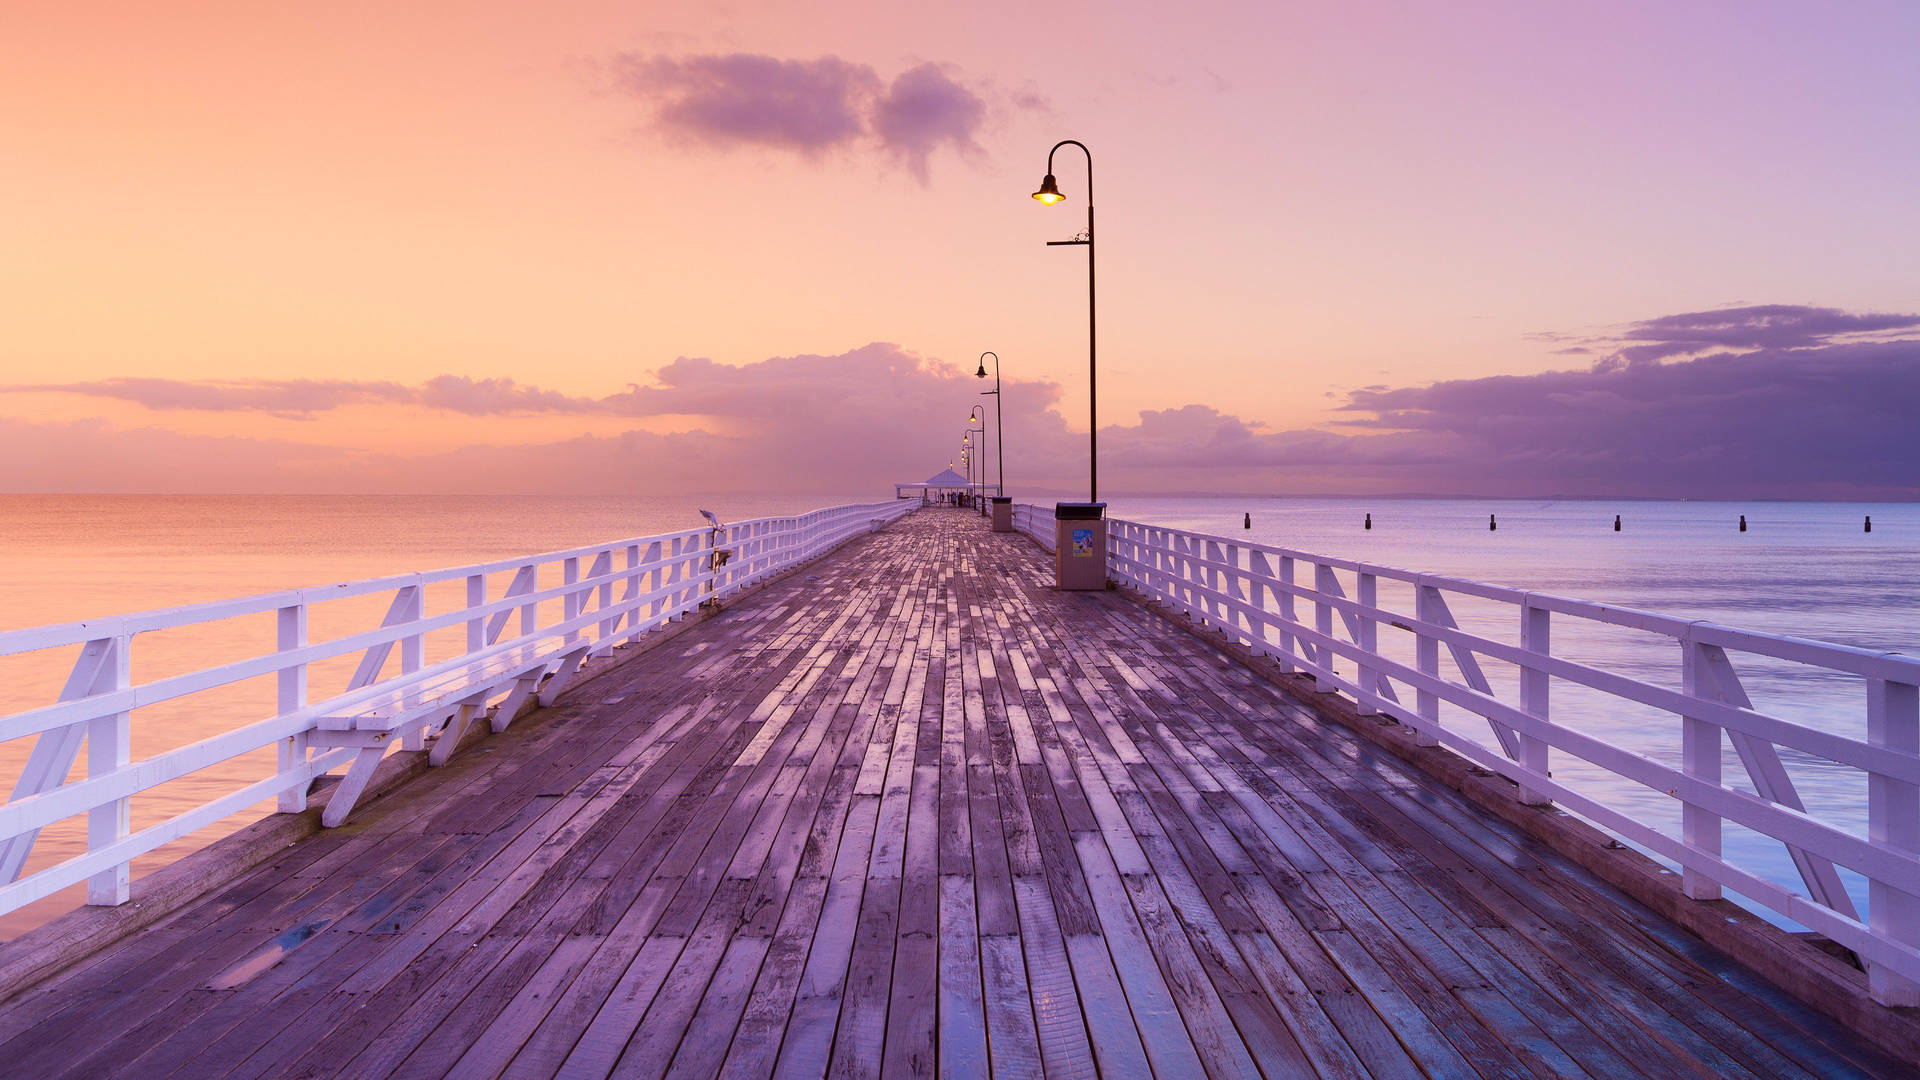 Boardwalk At Sunset Macbook Pro Aesthetic